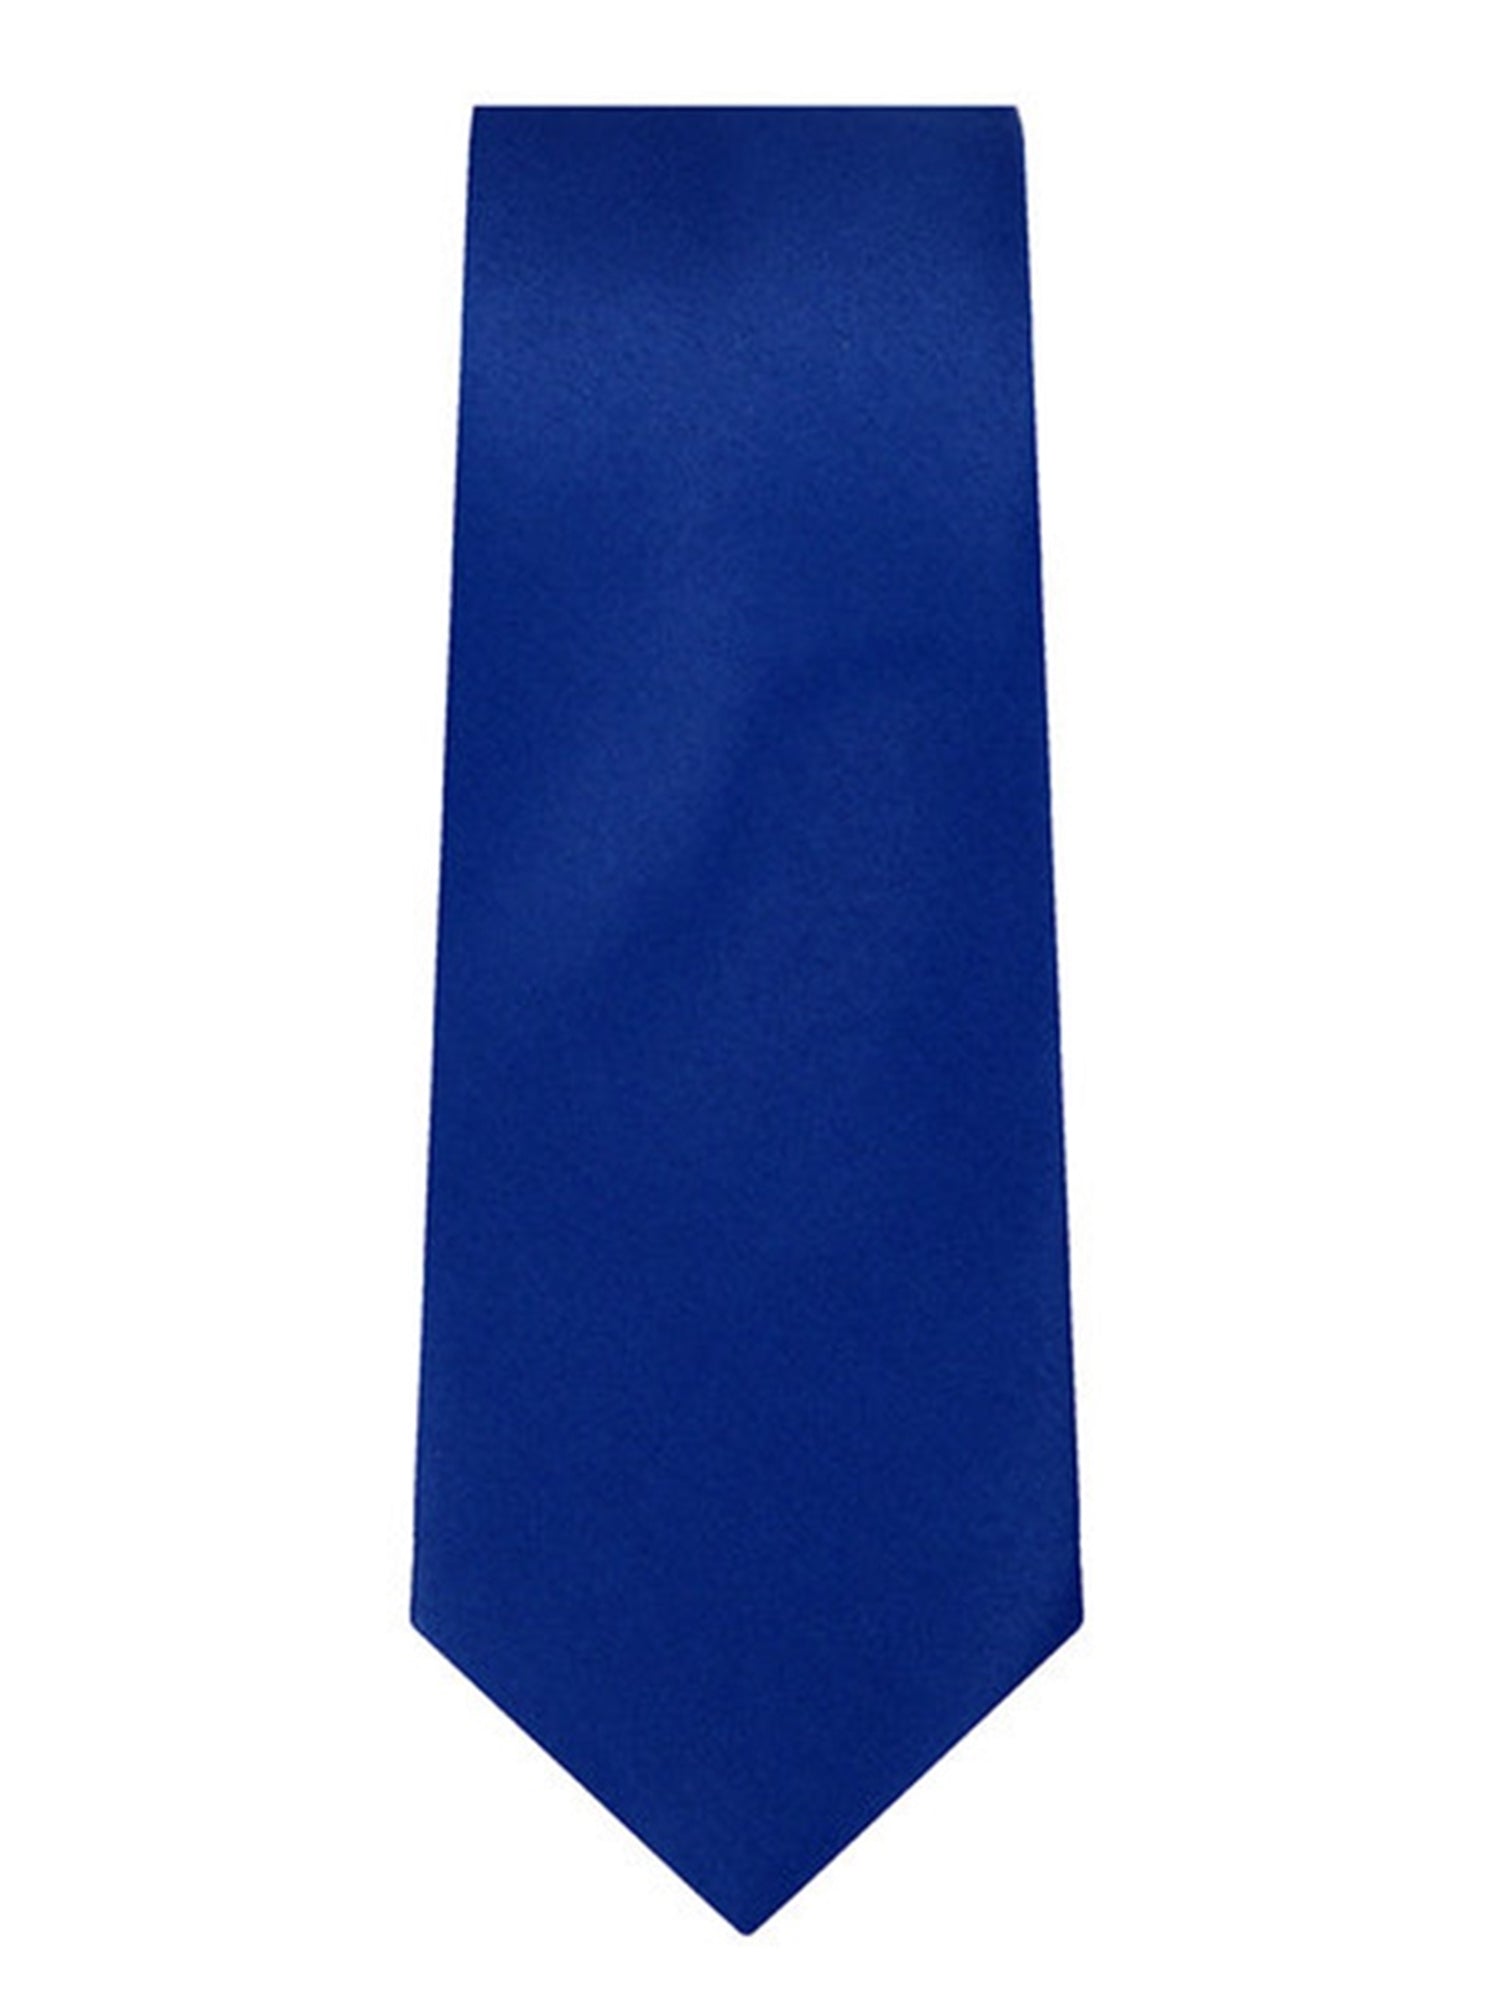 Marquis Men's Solid Slim Neck Tie & Hanky Set Neck Ties TheDapperTie Royal Blue One Size 